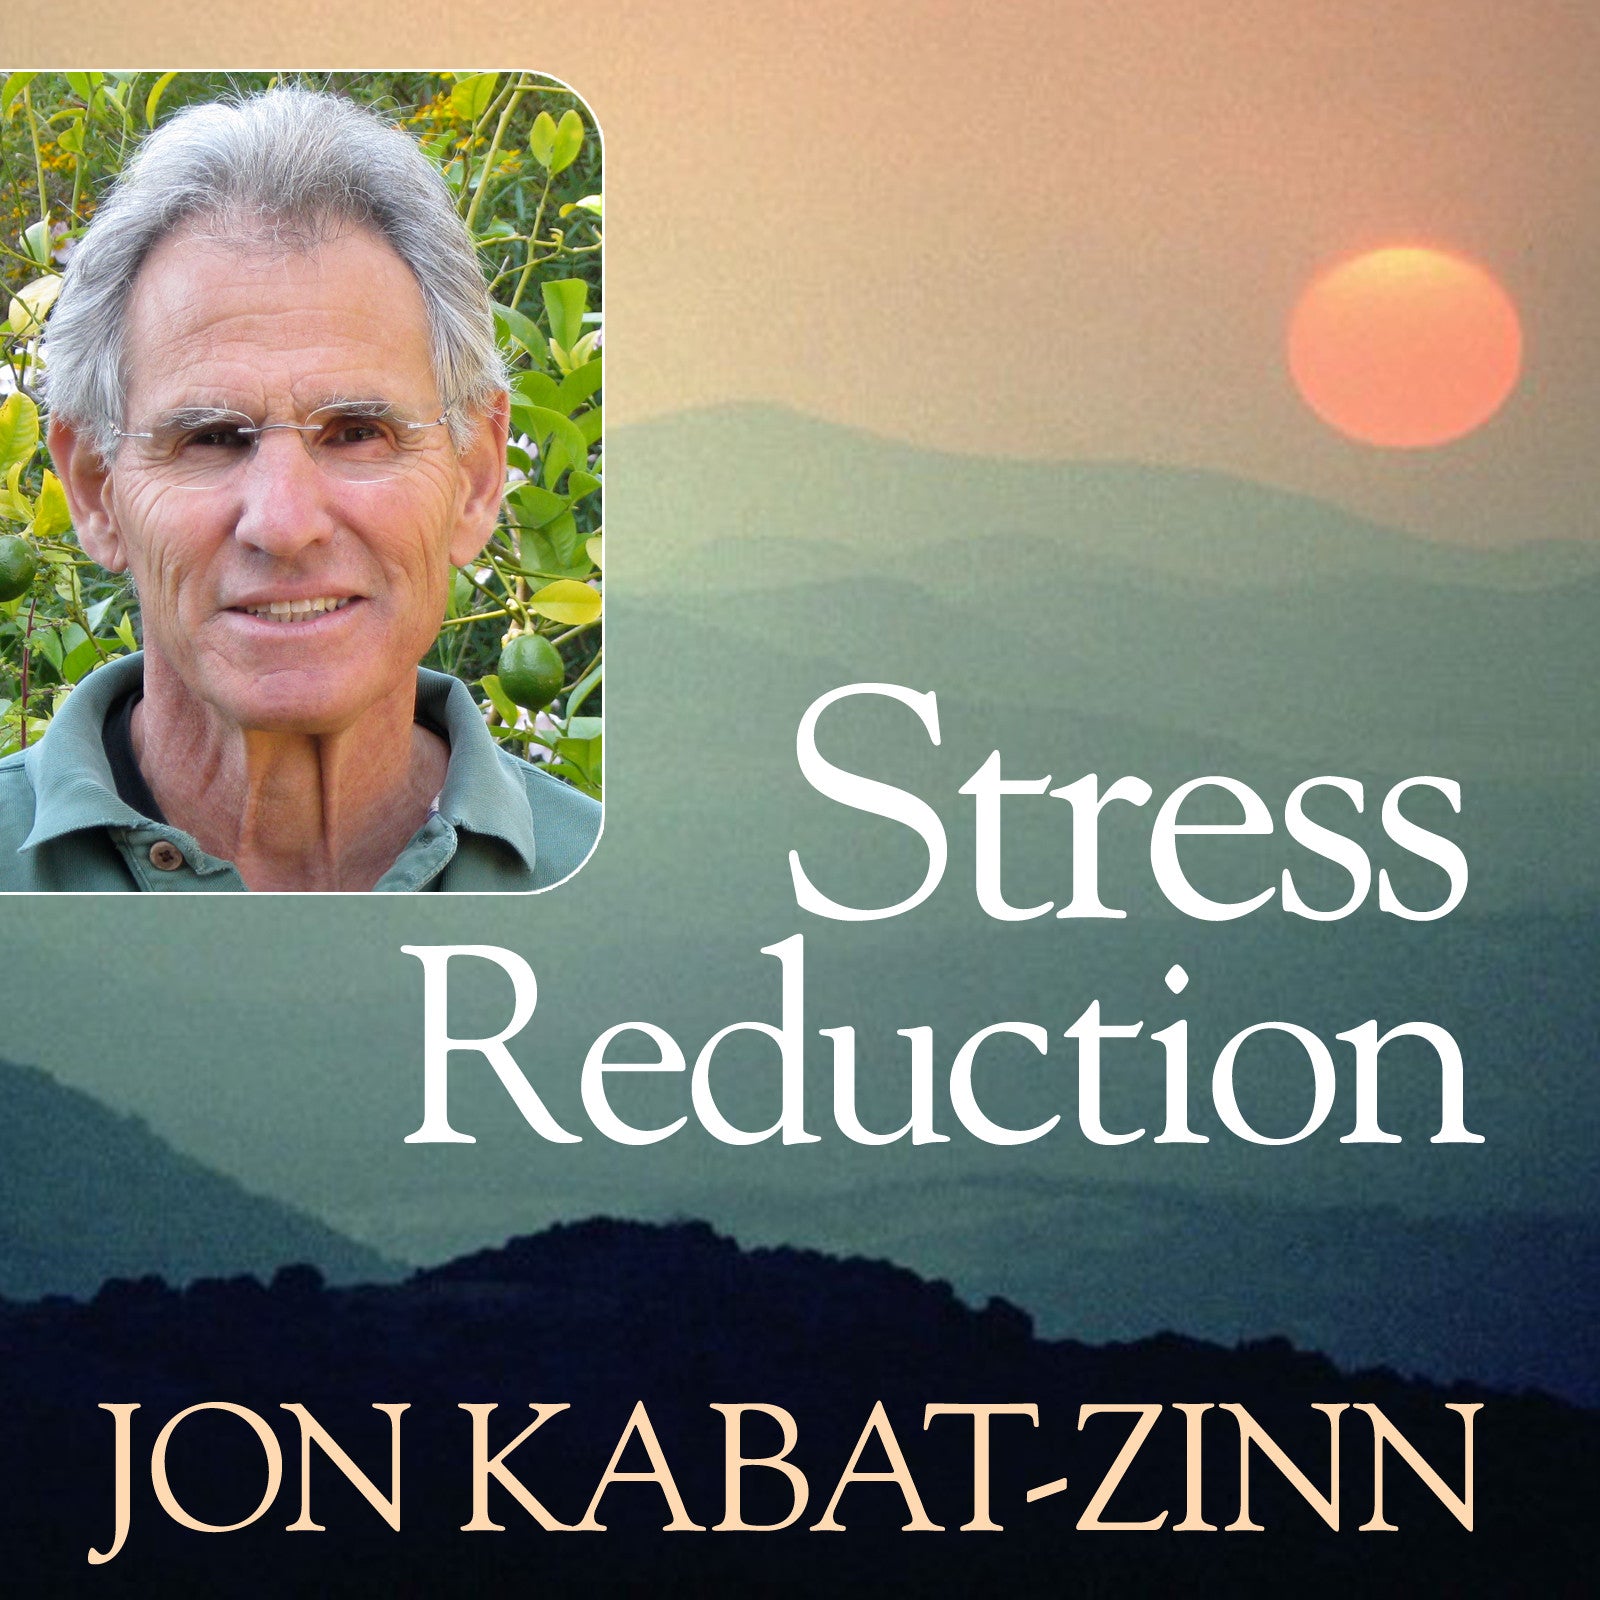 Stress Reduction with Jon Kabat-Zinn  - Audio and Streaming Video Audio Program Jon Kabat-Zinn - BetterListen!